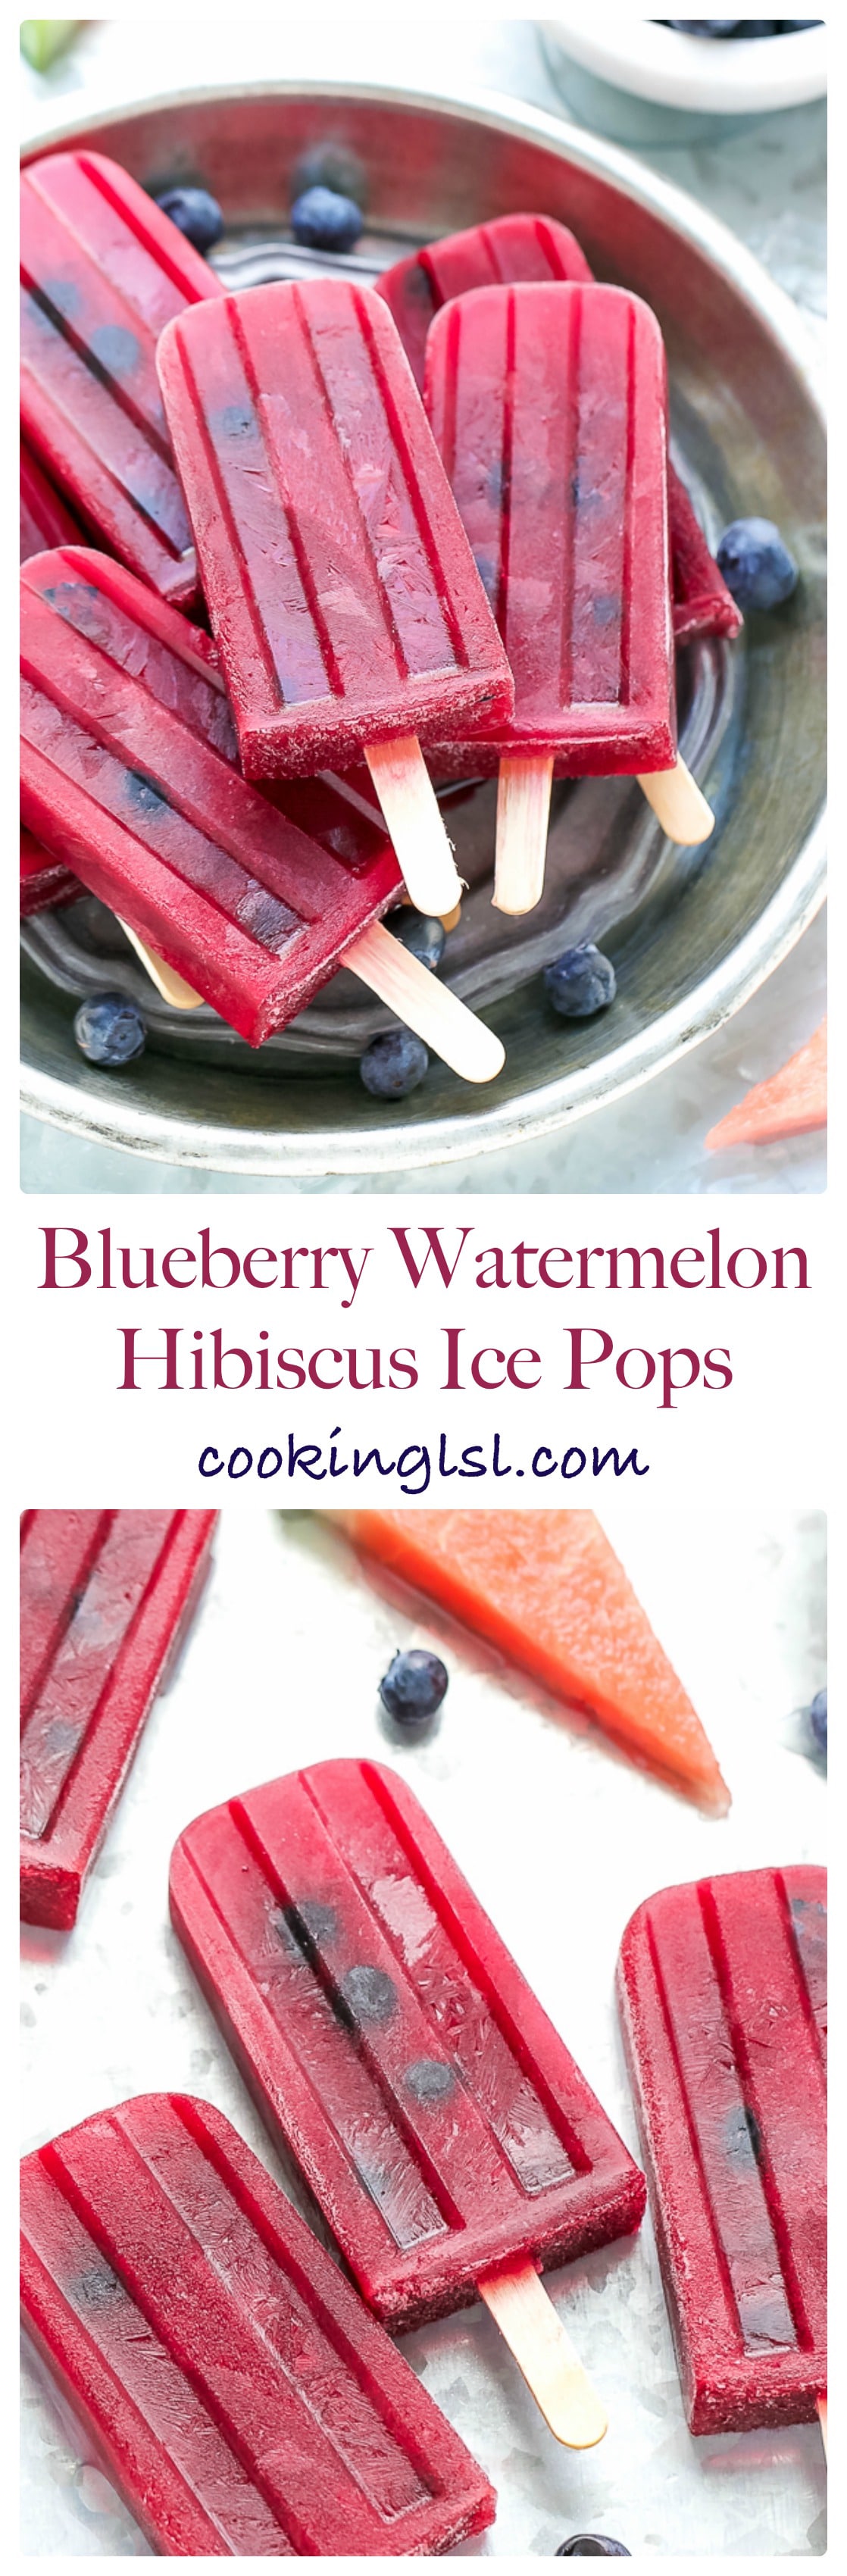 Popsicles-Blueberry-Watermelon-Hibiscus-Ice-Pops-Recipe